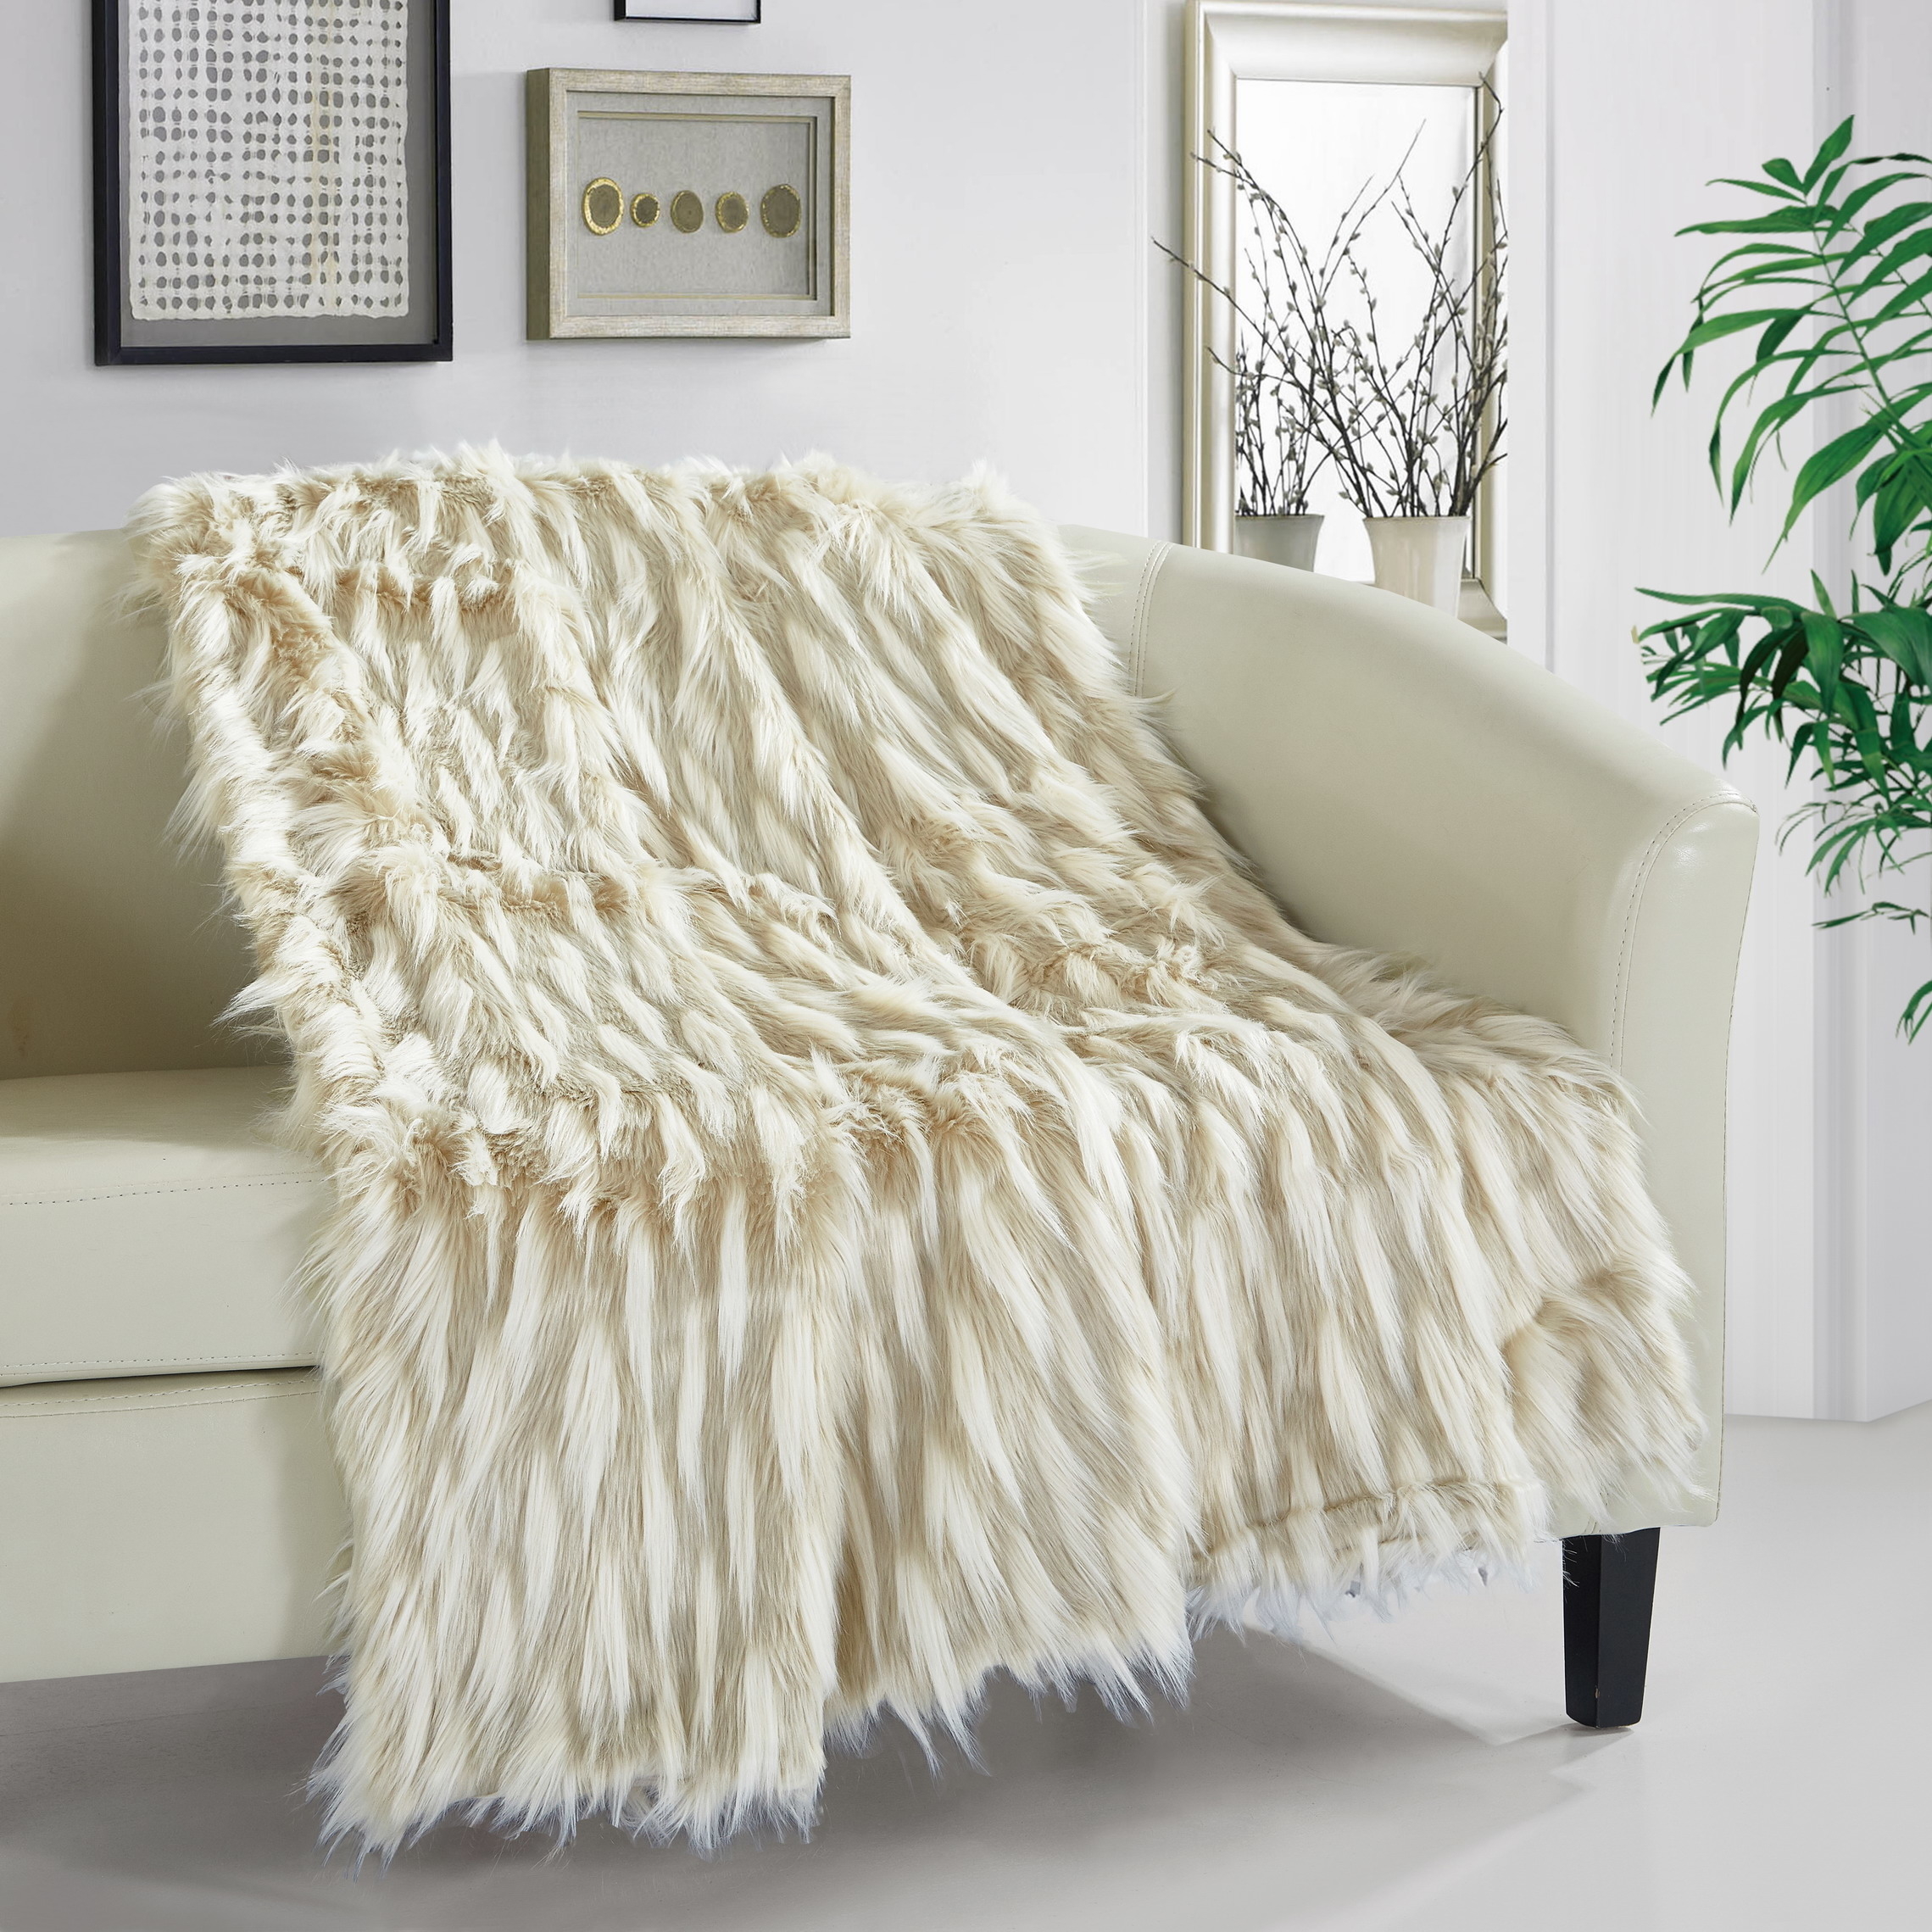 Levida Throw Blanket Super Soft Ultra Plush Micromink Backing Decorative Two-Tone Design - Gray